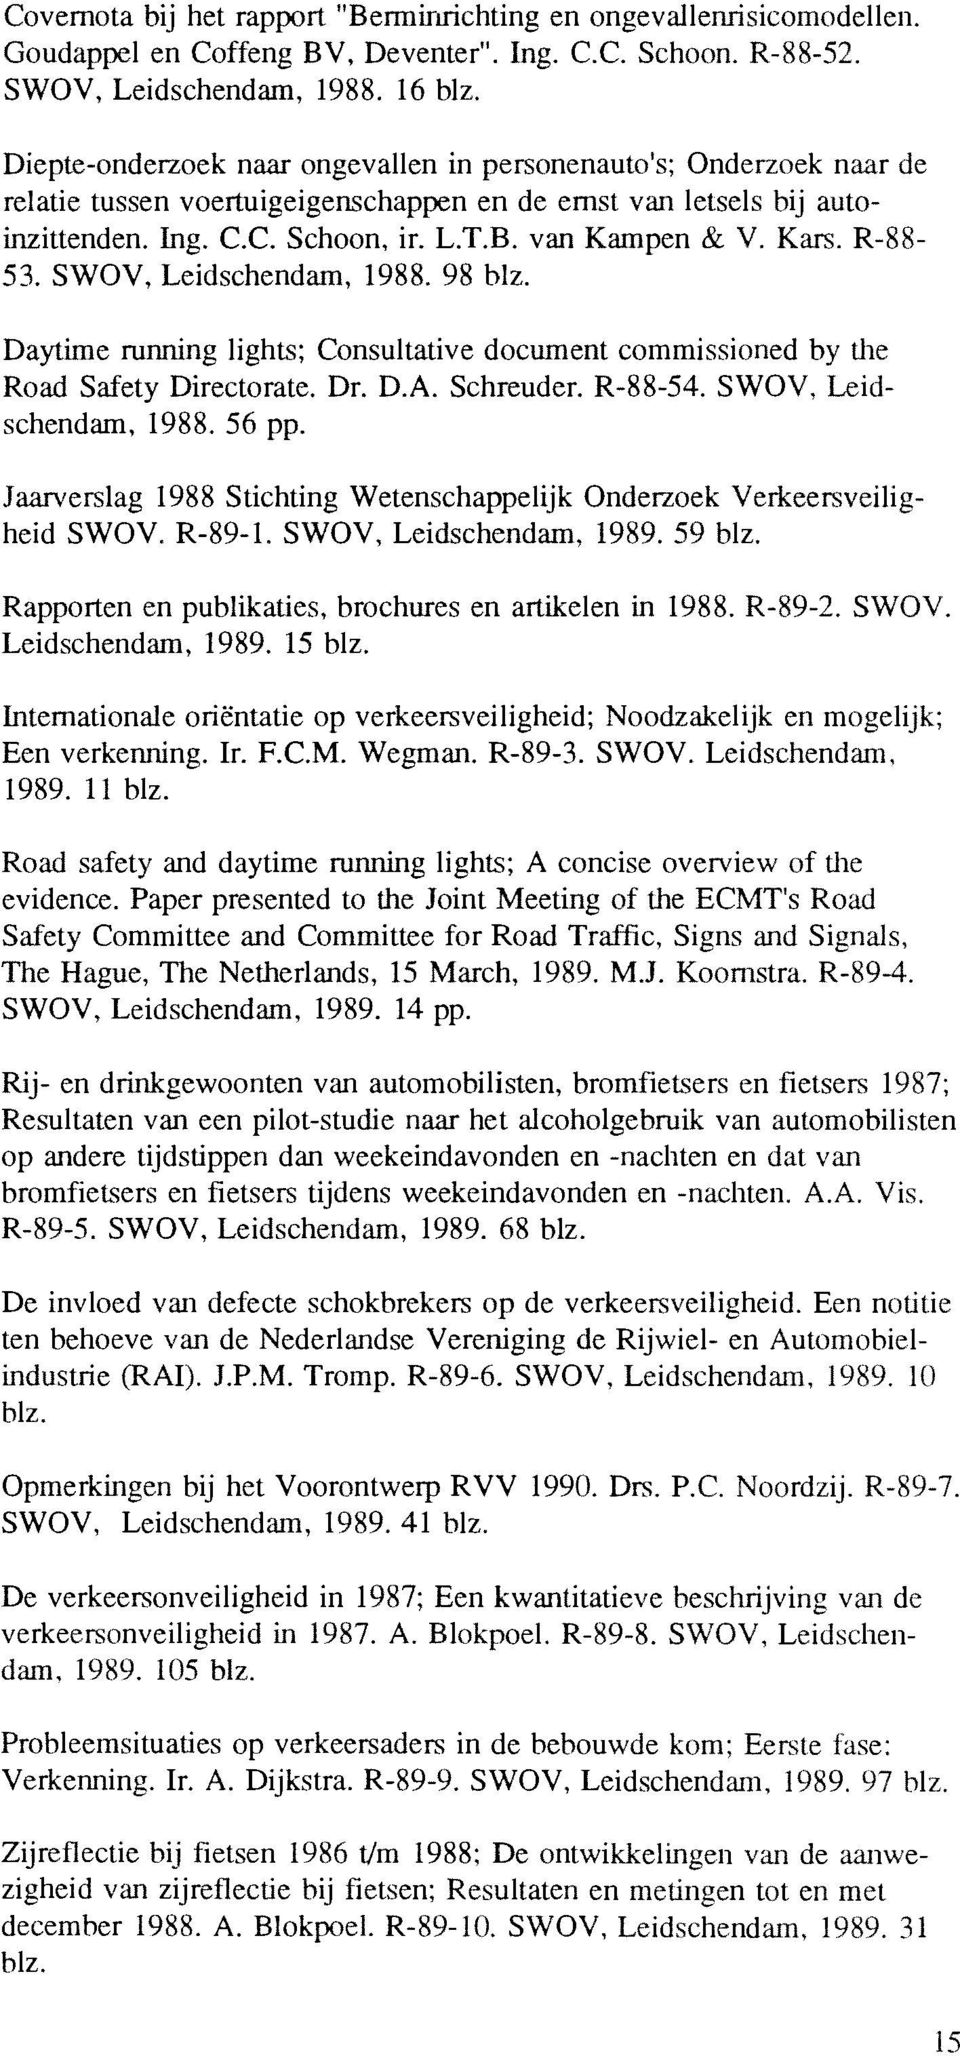 Kars. R-88-53. SWOV, Leidschendam, 1988. 98 blz. Daytime running lights; Consultative document commissioned by the Road Safety Directorate. Dr. D.A. Schreuder. R-88-54. SWOV, Leidschendam, 1988. 56 pp.